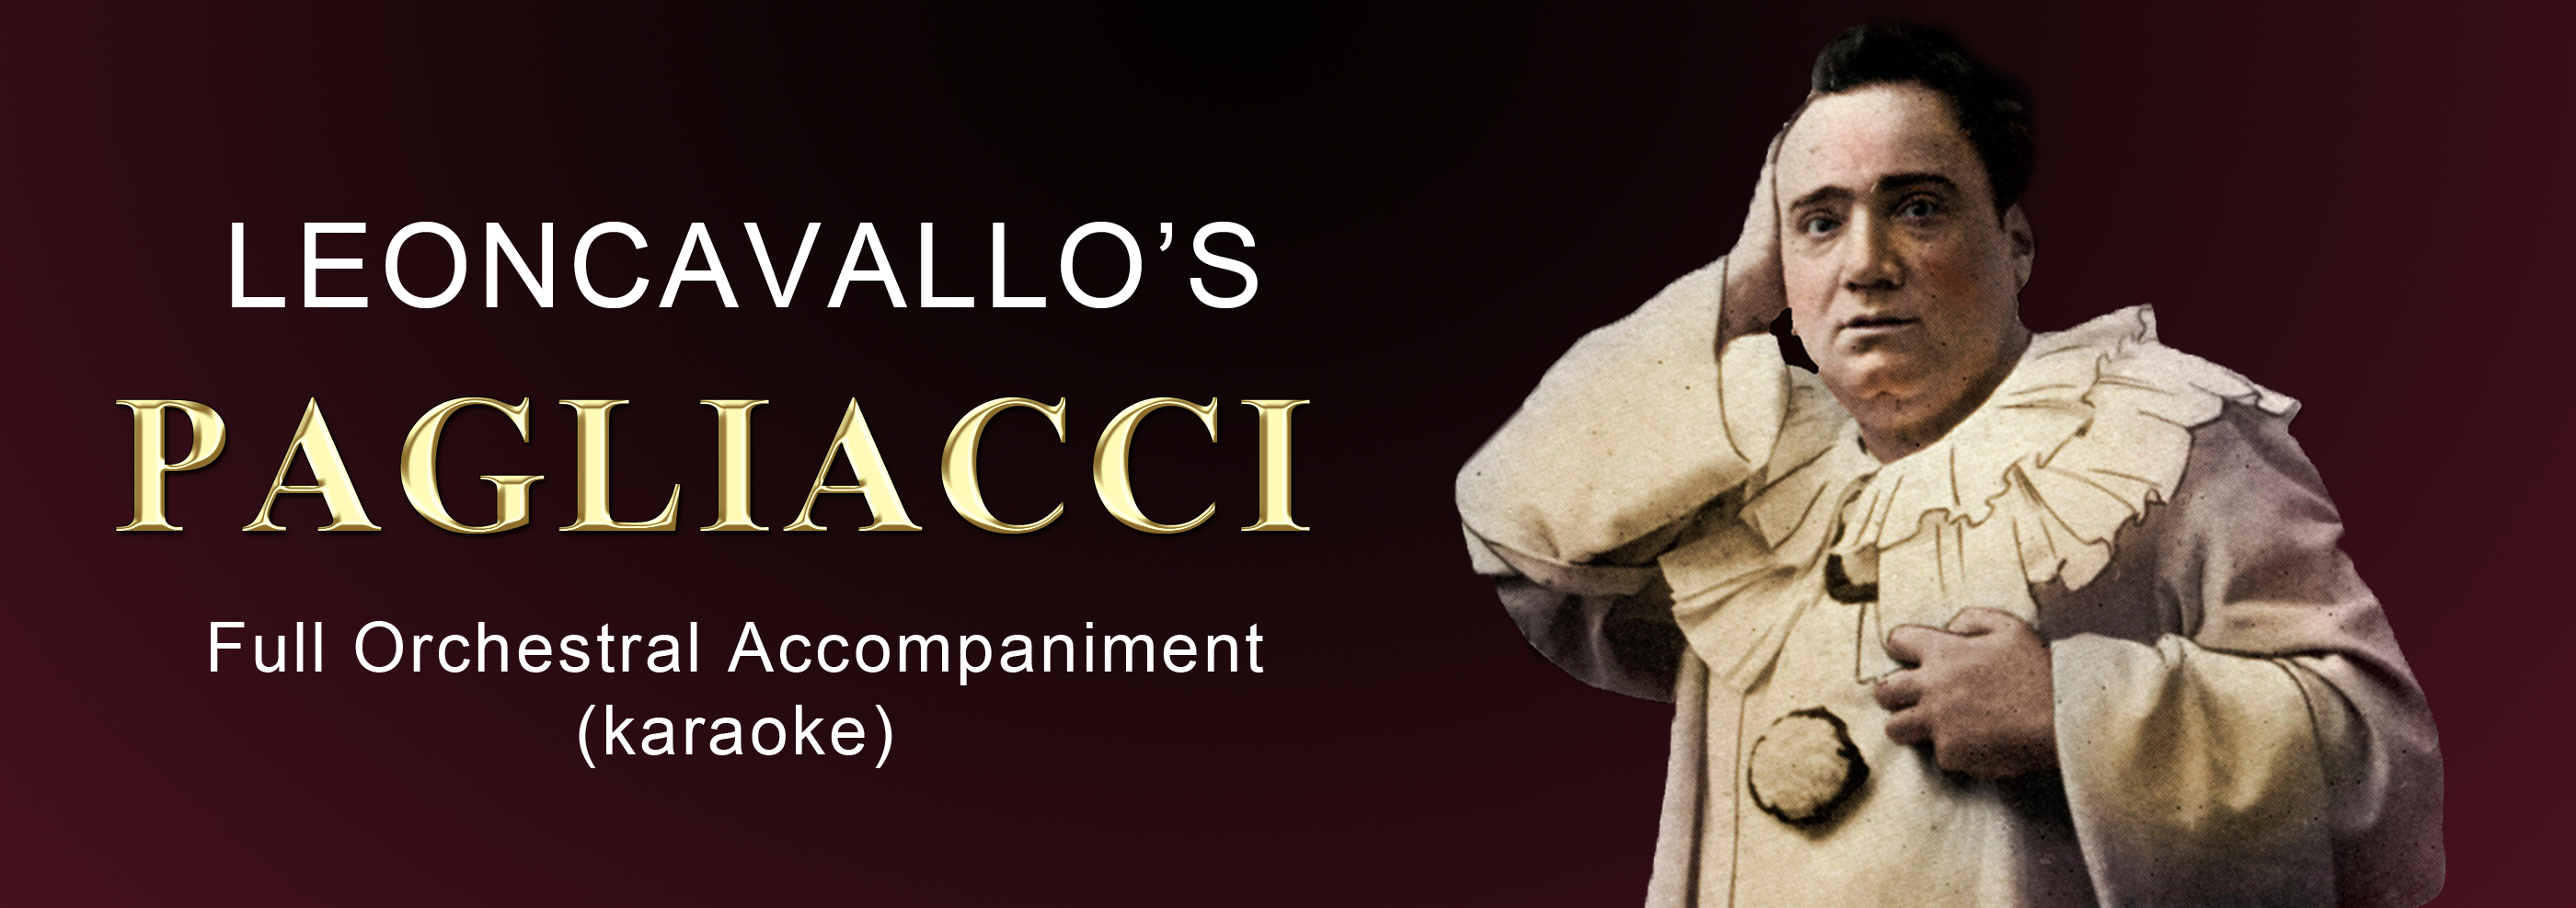 Pagliacci, Complete Opera, Full Orchestral Accompaniment (karaoke) tracks